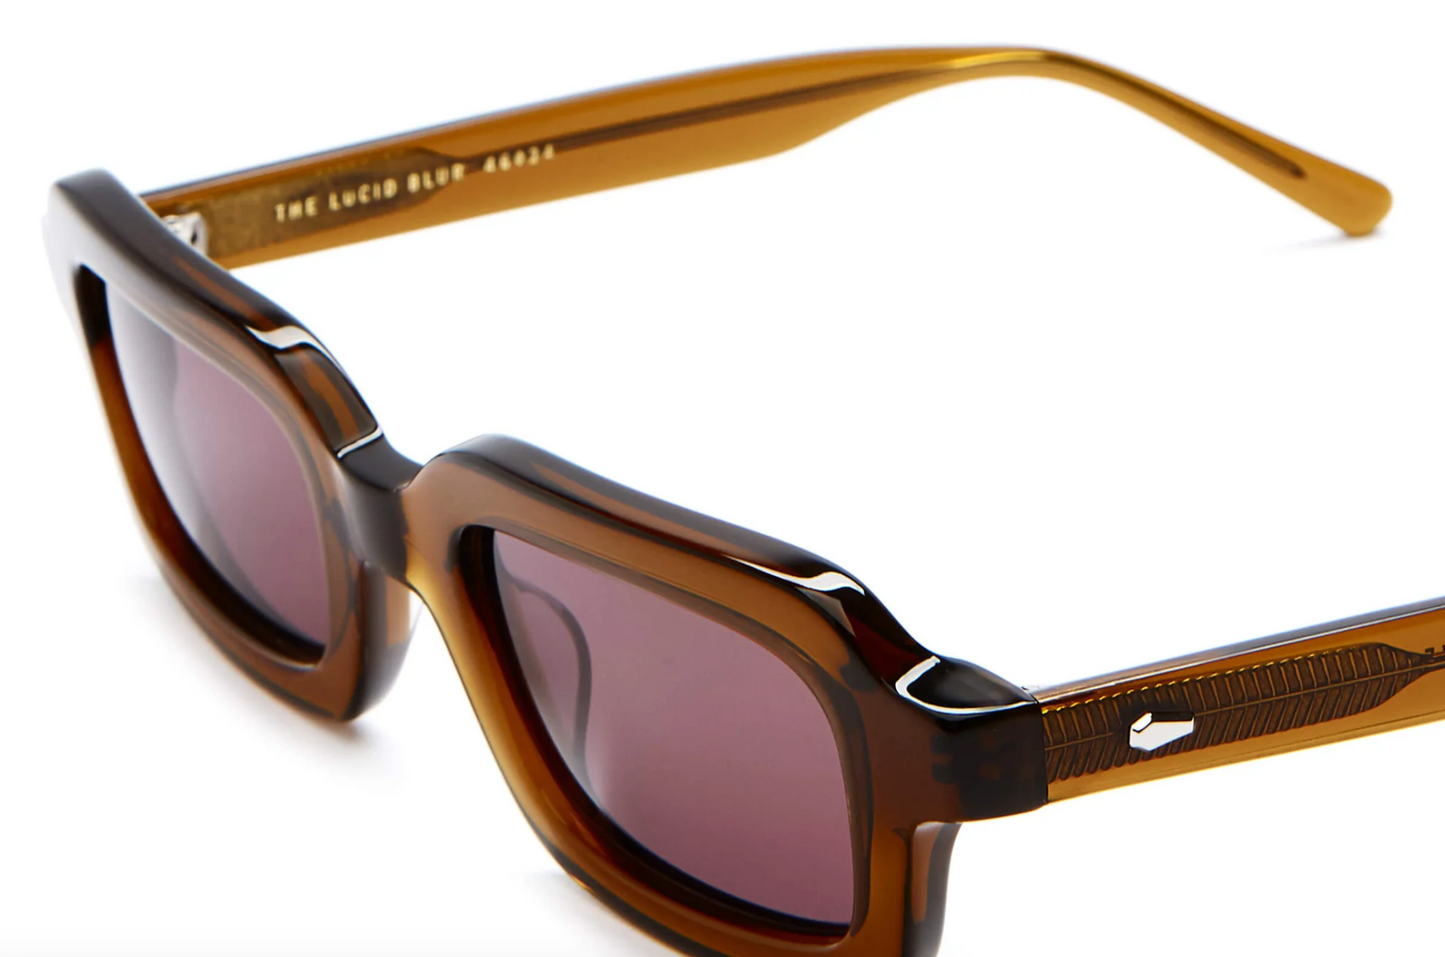 The Lucid Blur Sunglasses by Crap Eyewear